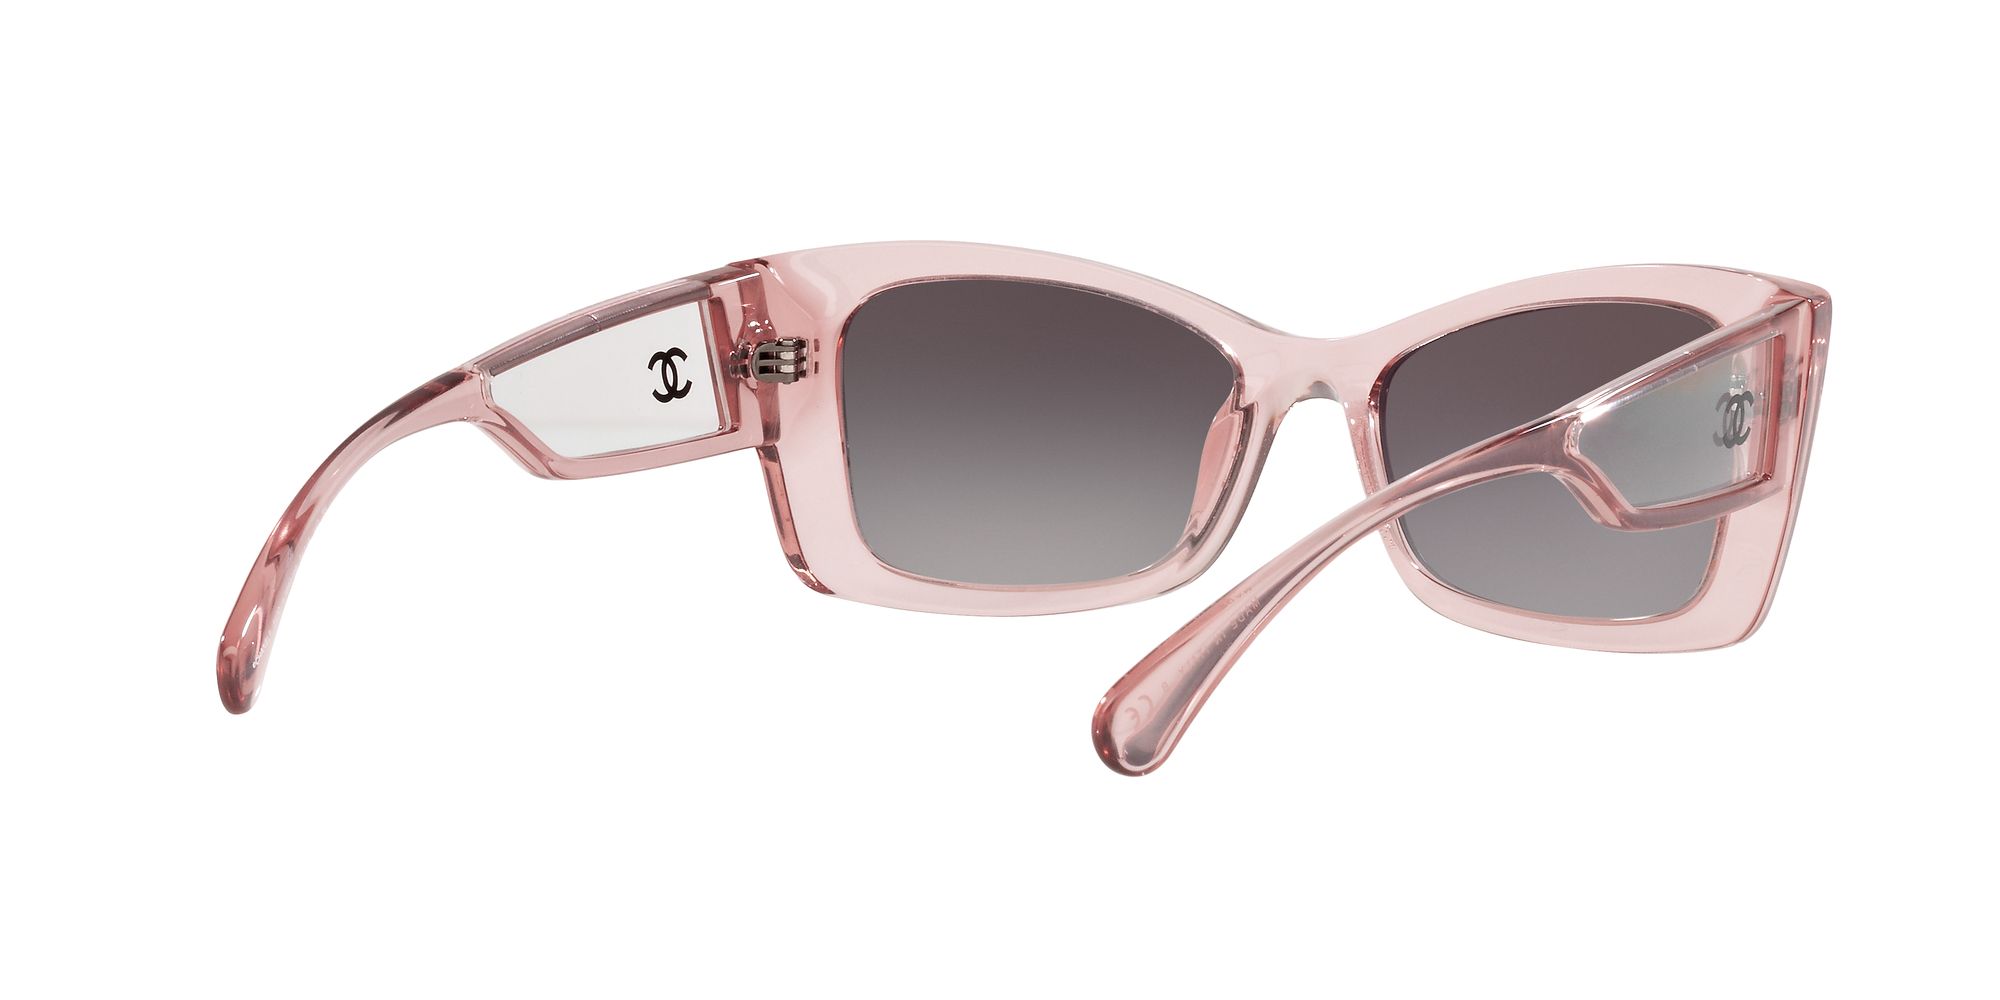 CHANEL CH5430 Women's Irregular Sunglasses, Pink at John Lewis